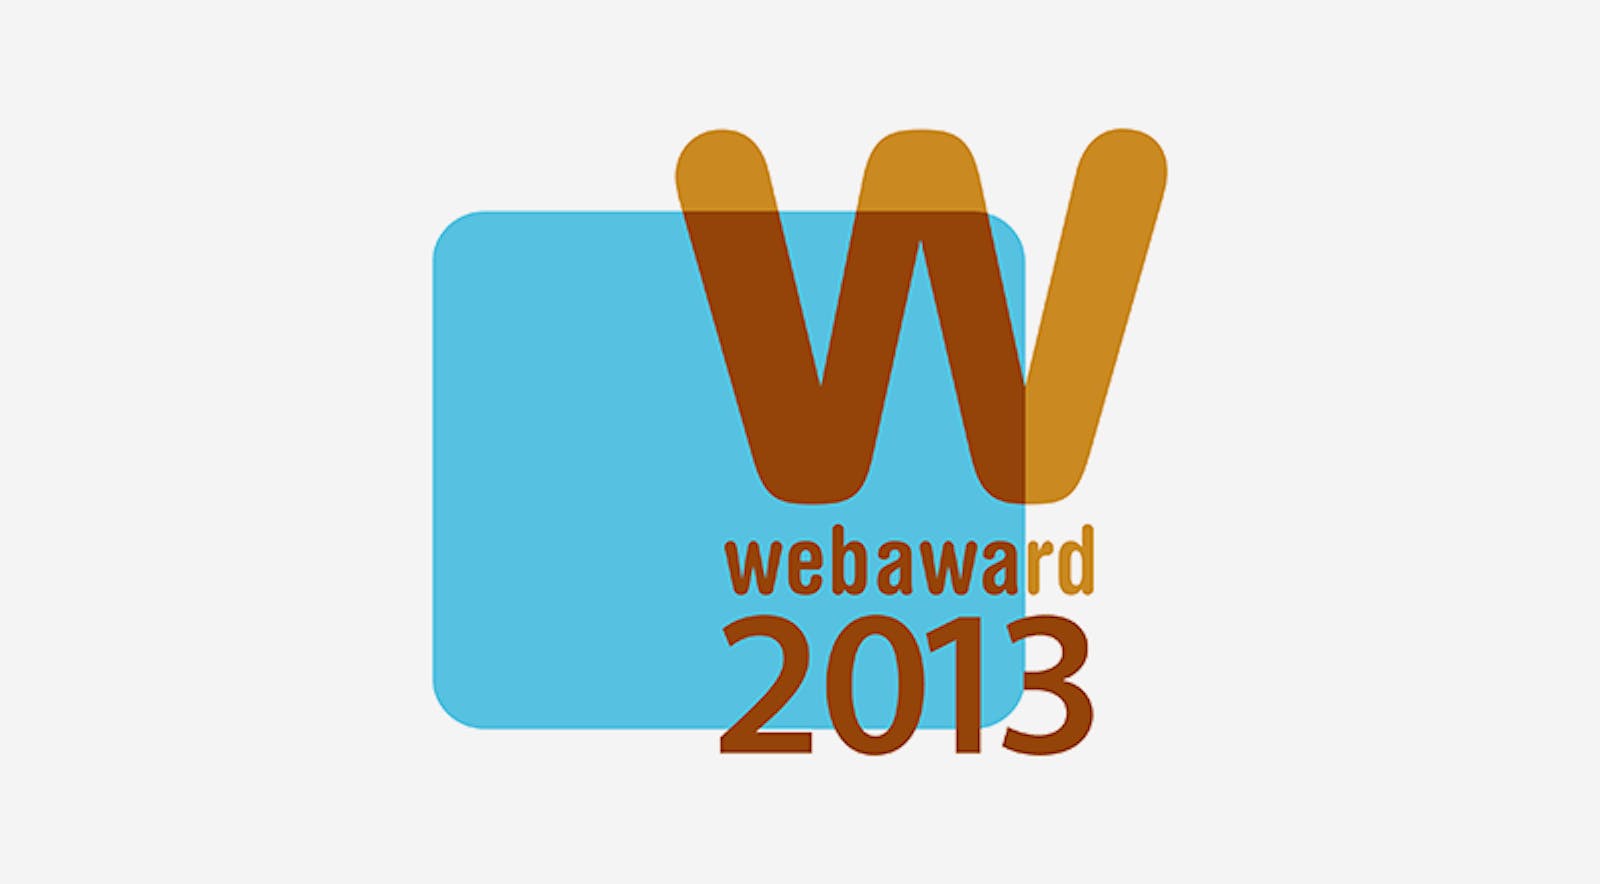 WebAward 2013 for Masdar website